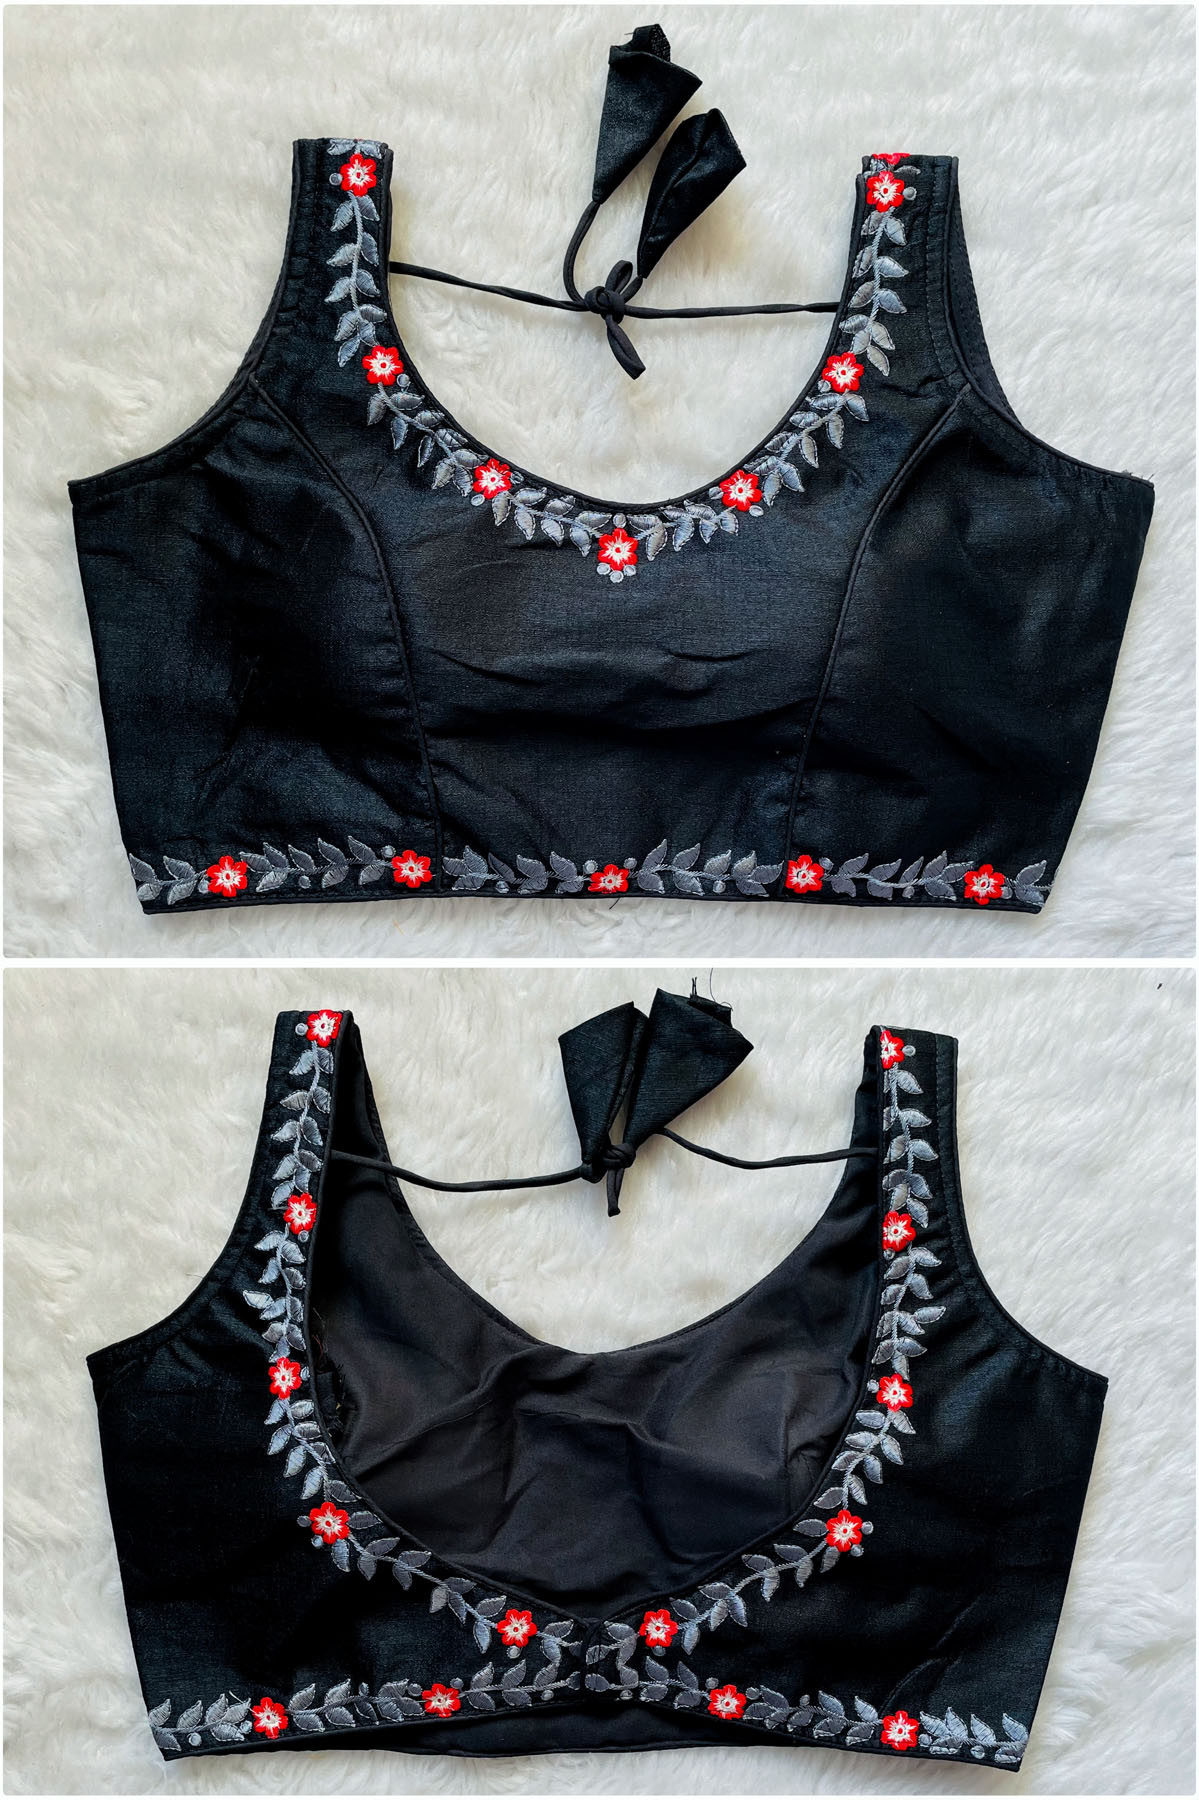 Embroidered Phantom Silk Designer Blouse - Black(M)